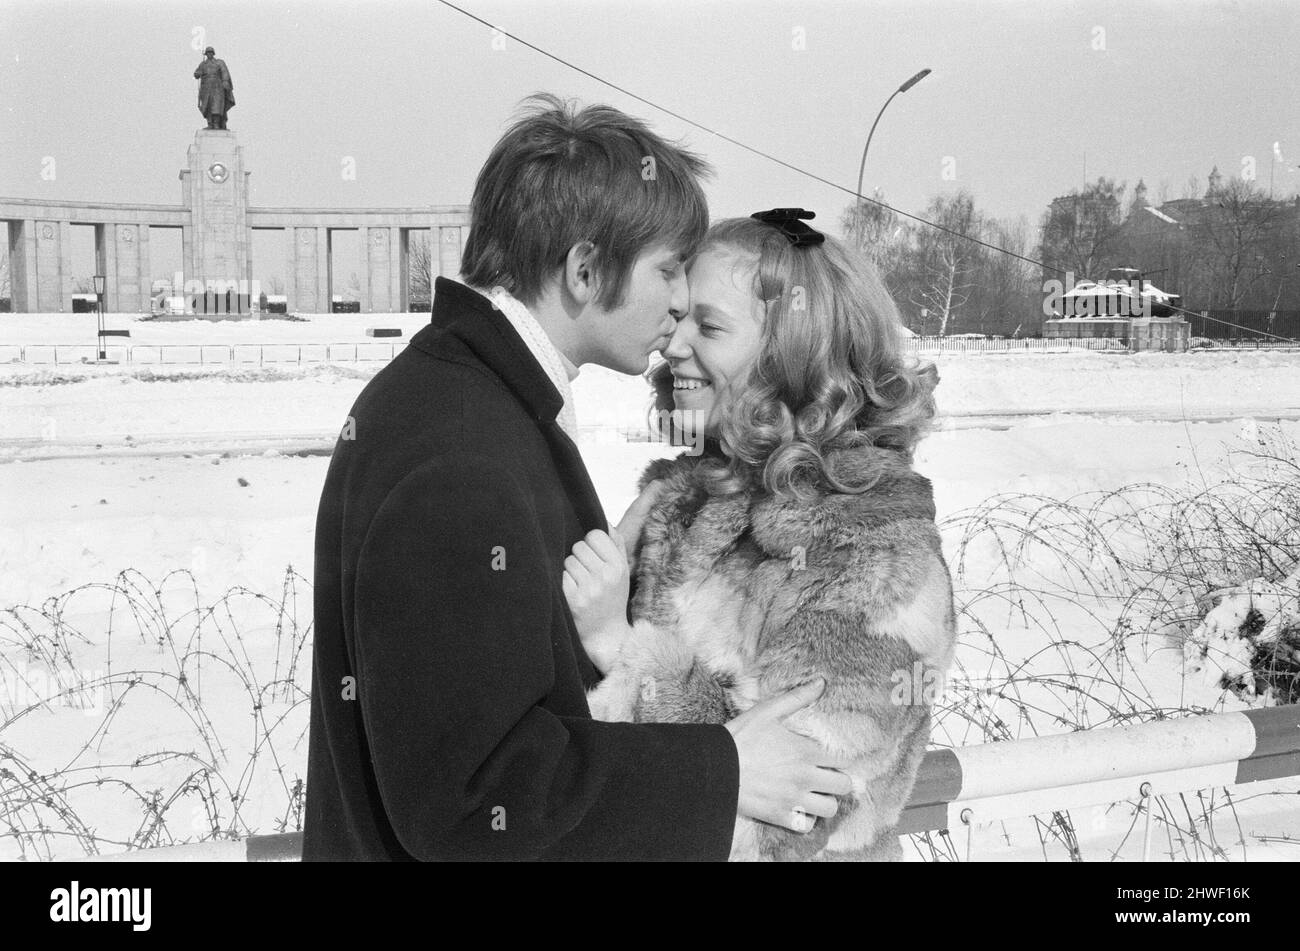 File:Kiss, Love kiss, Romance, People kissing, Rostov-on-Don, Russia.jpg -  Simple English Wikipedia, the free encyclopedia